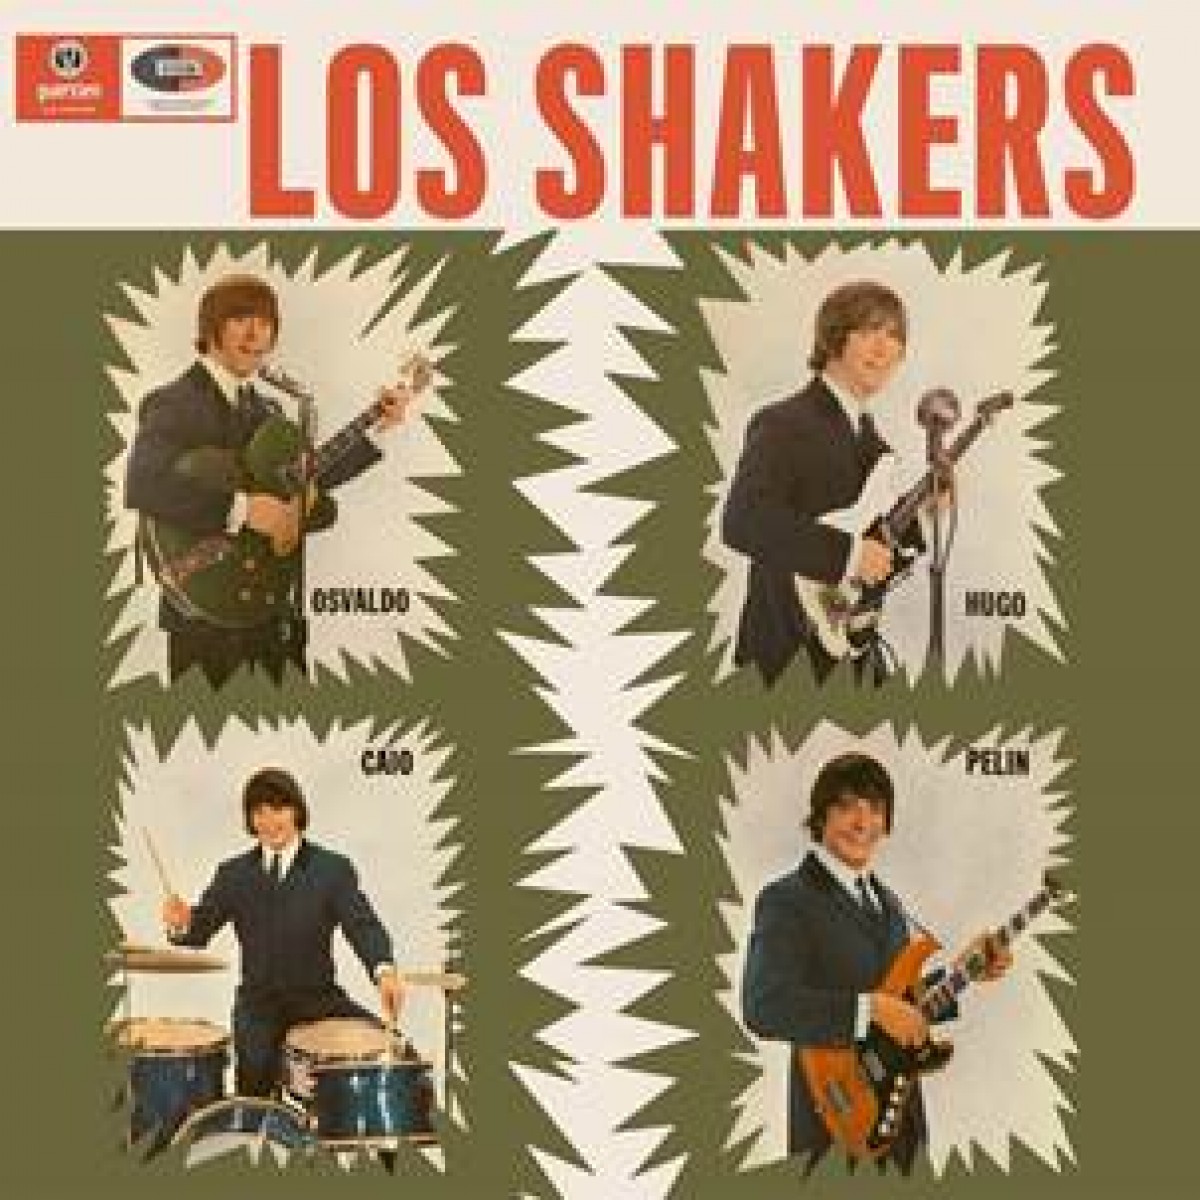 Los SHAKERS - “Los Shakers / Break It All” / GUERSSEN GUESS160 - Vinyl